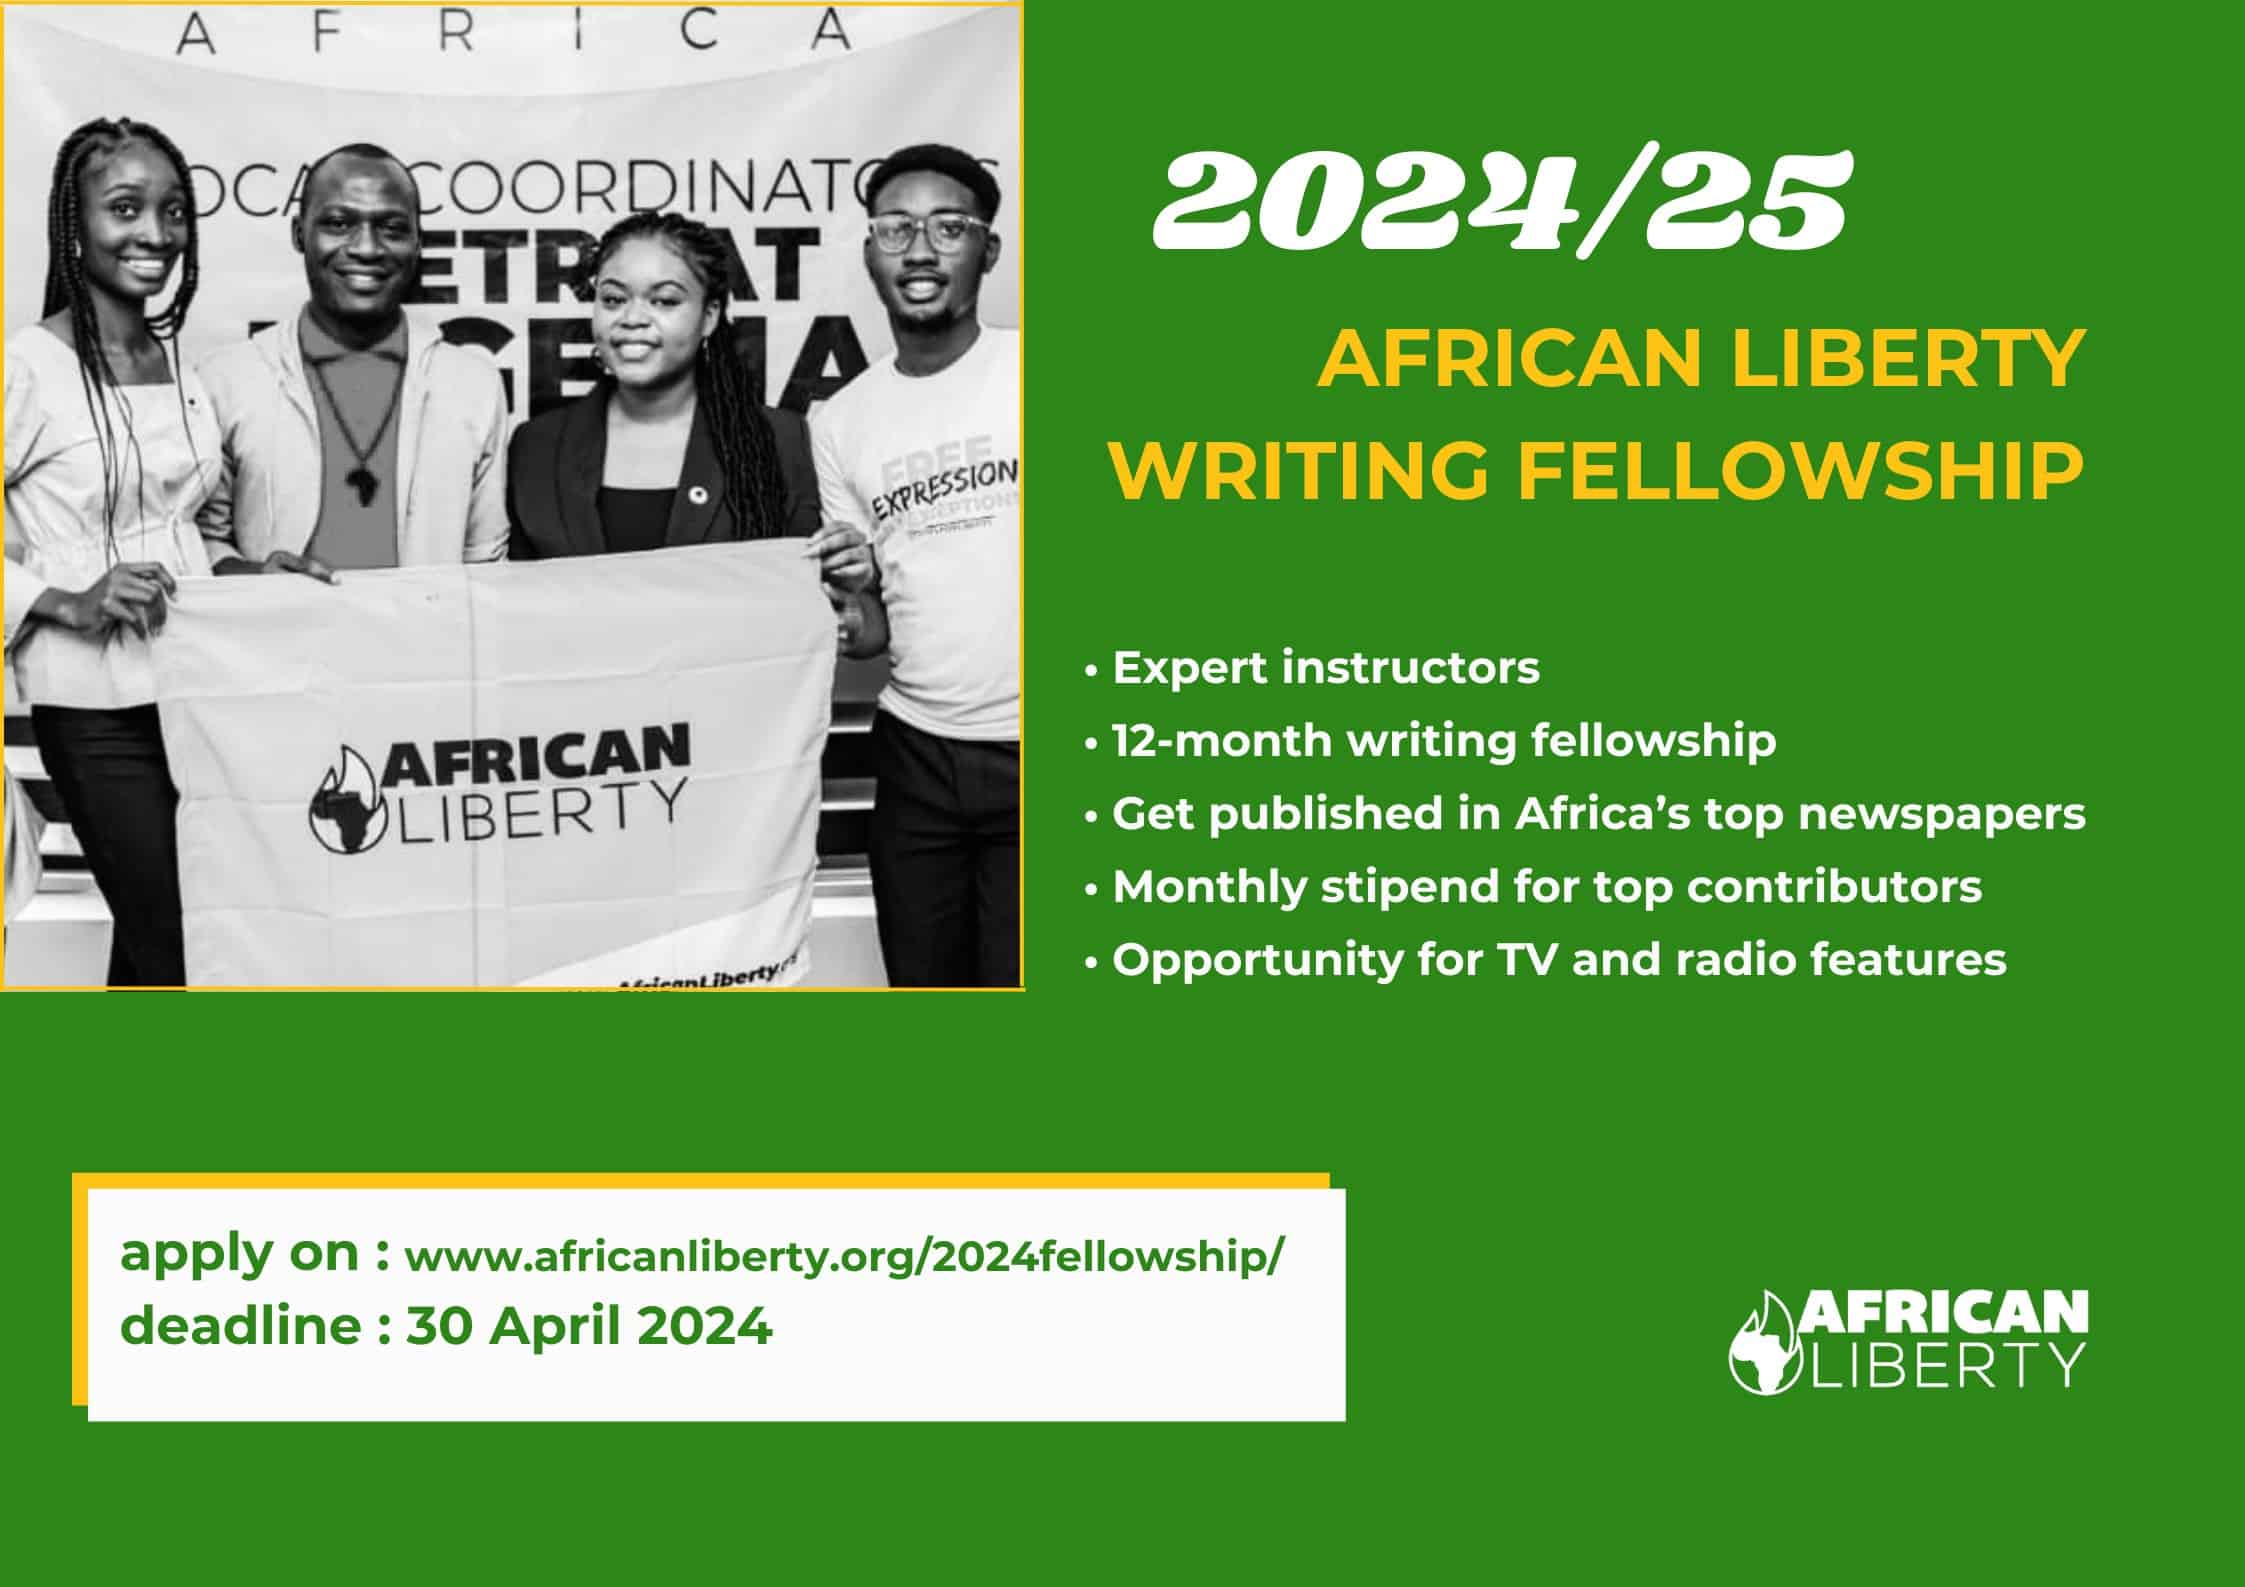 African Liberty Writing Fellowship Program